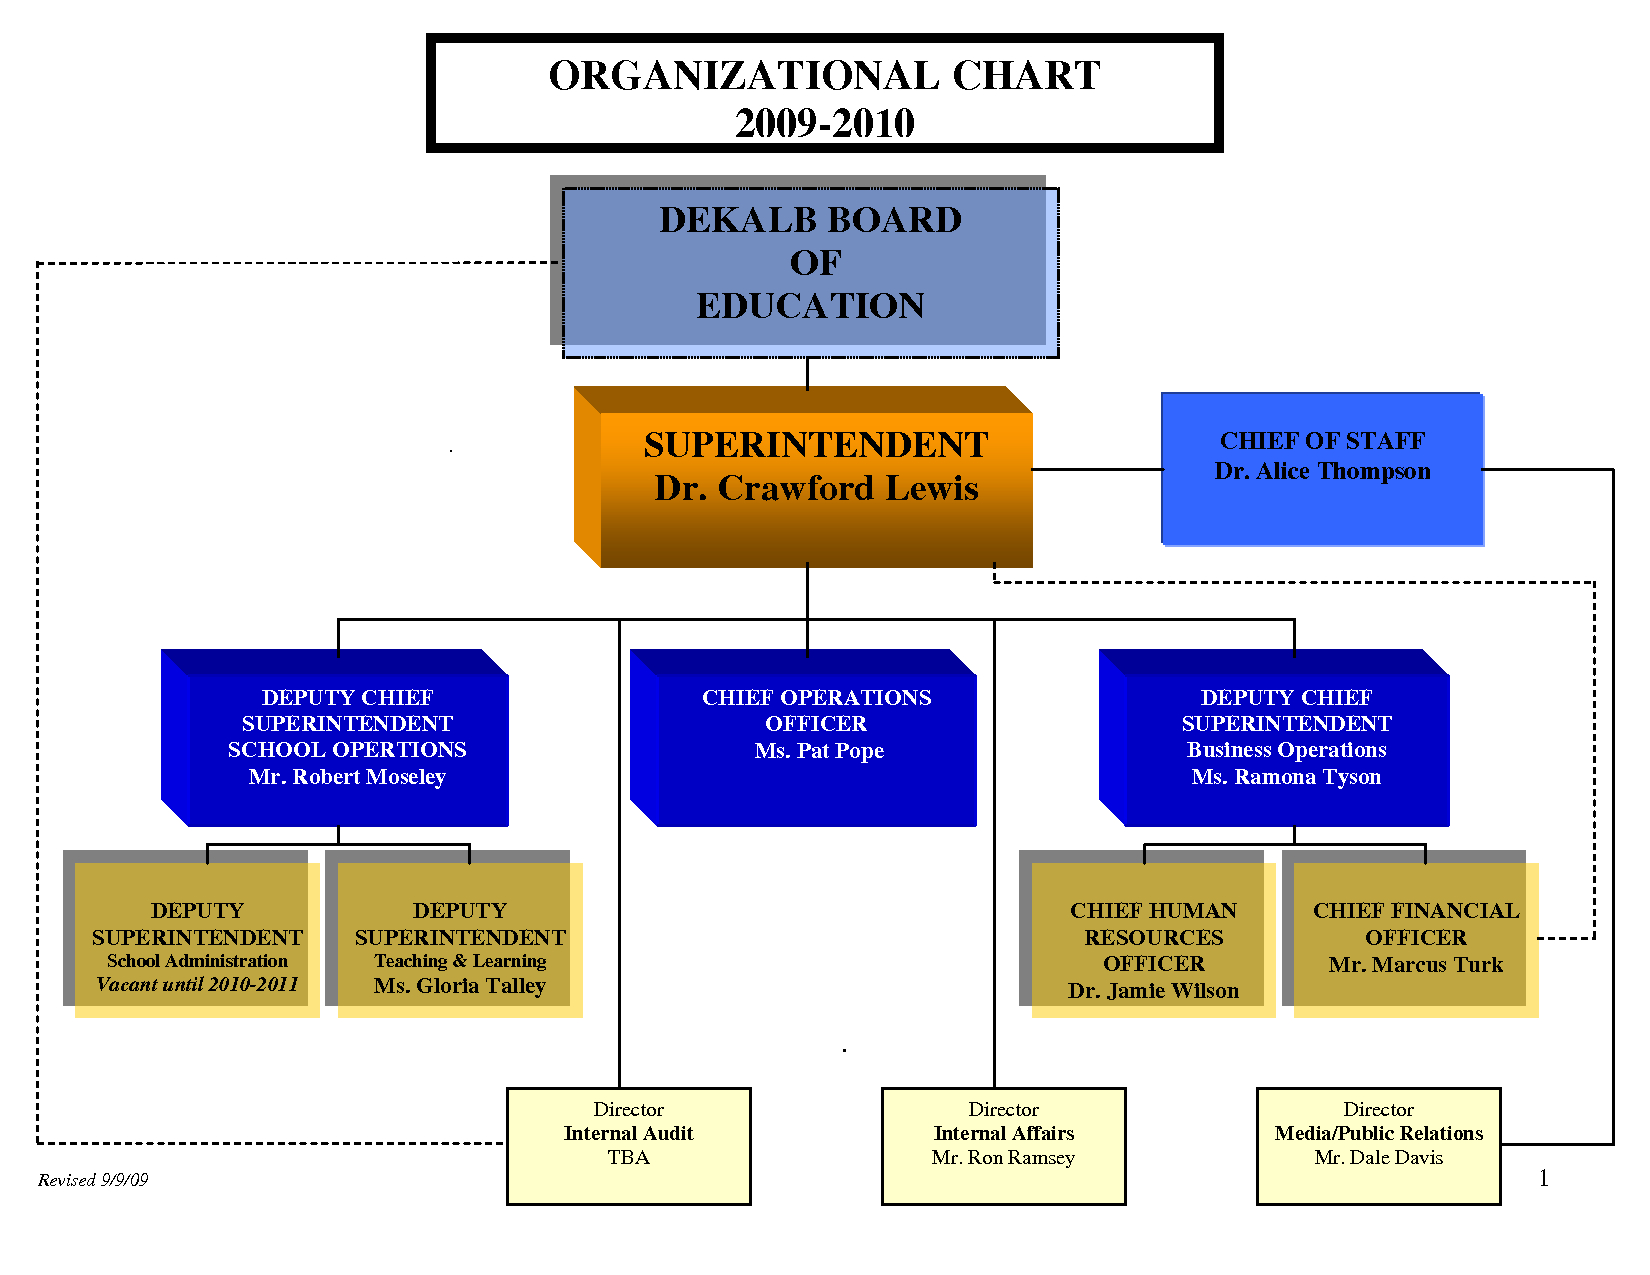 Organizational Chart Template Word | E Commercewordpress Throughout Organization Chart Template Word